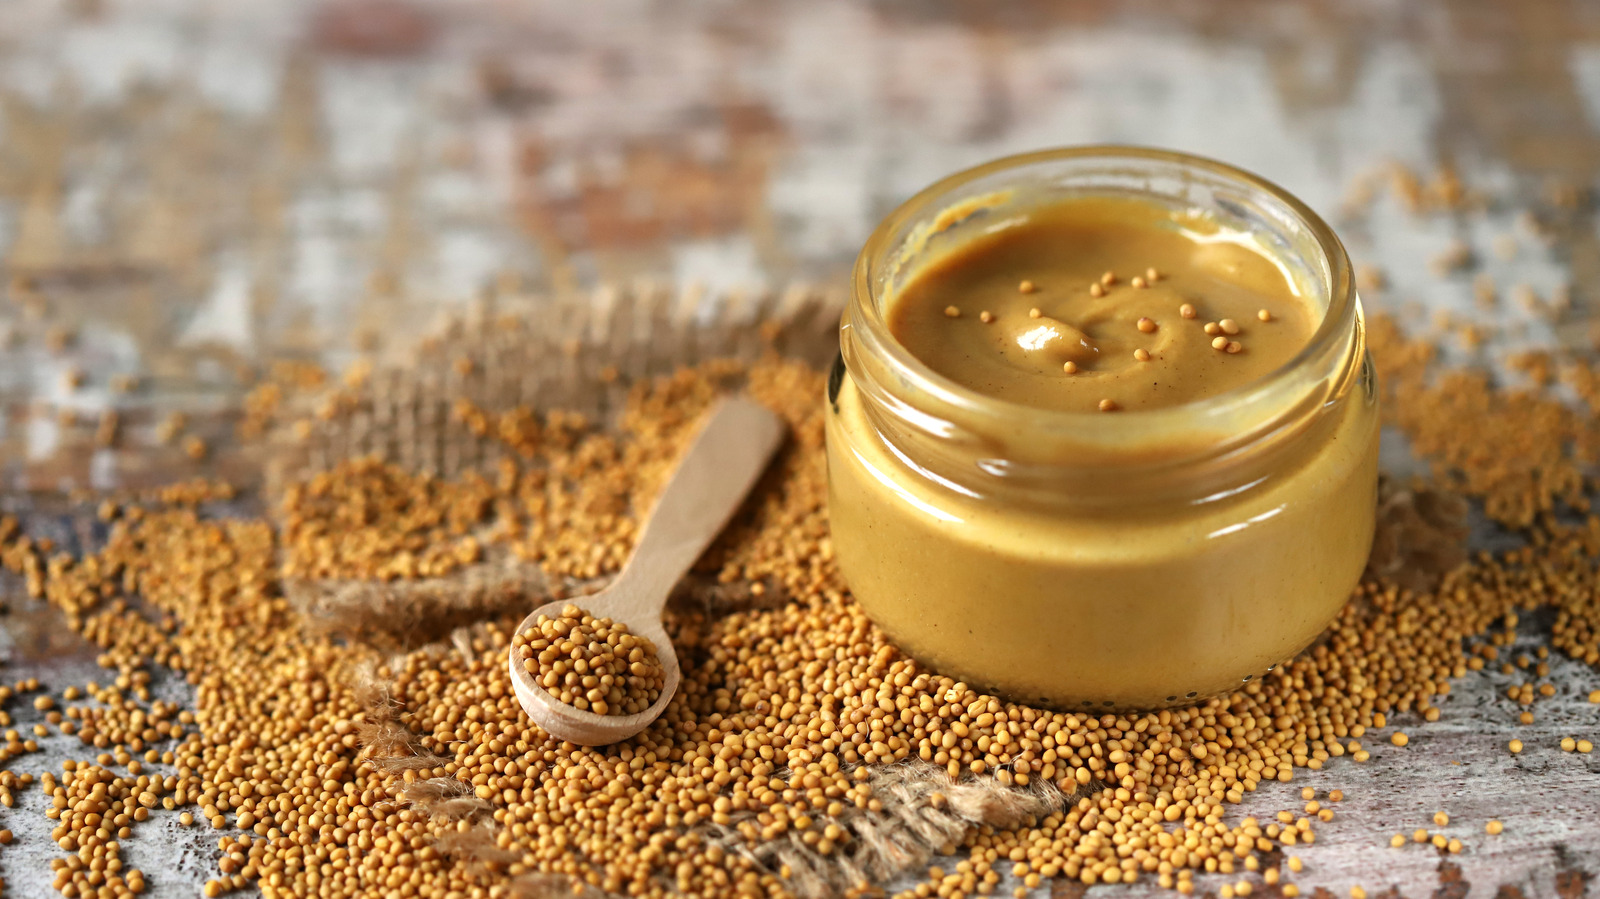 10 Best Substitutes For Dijon Mustard